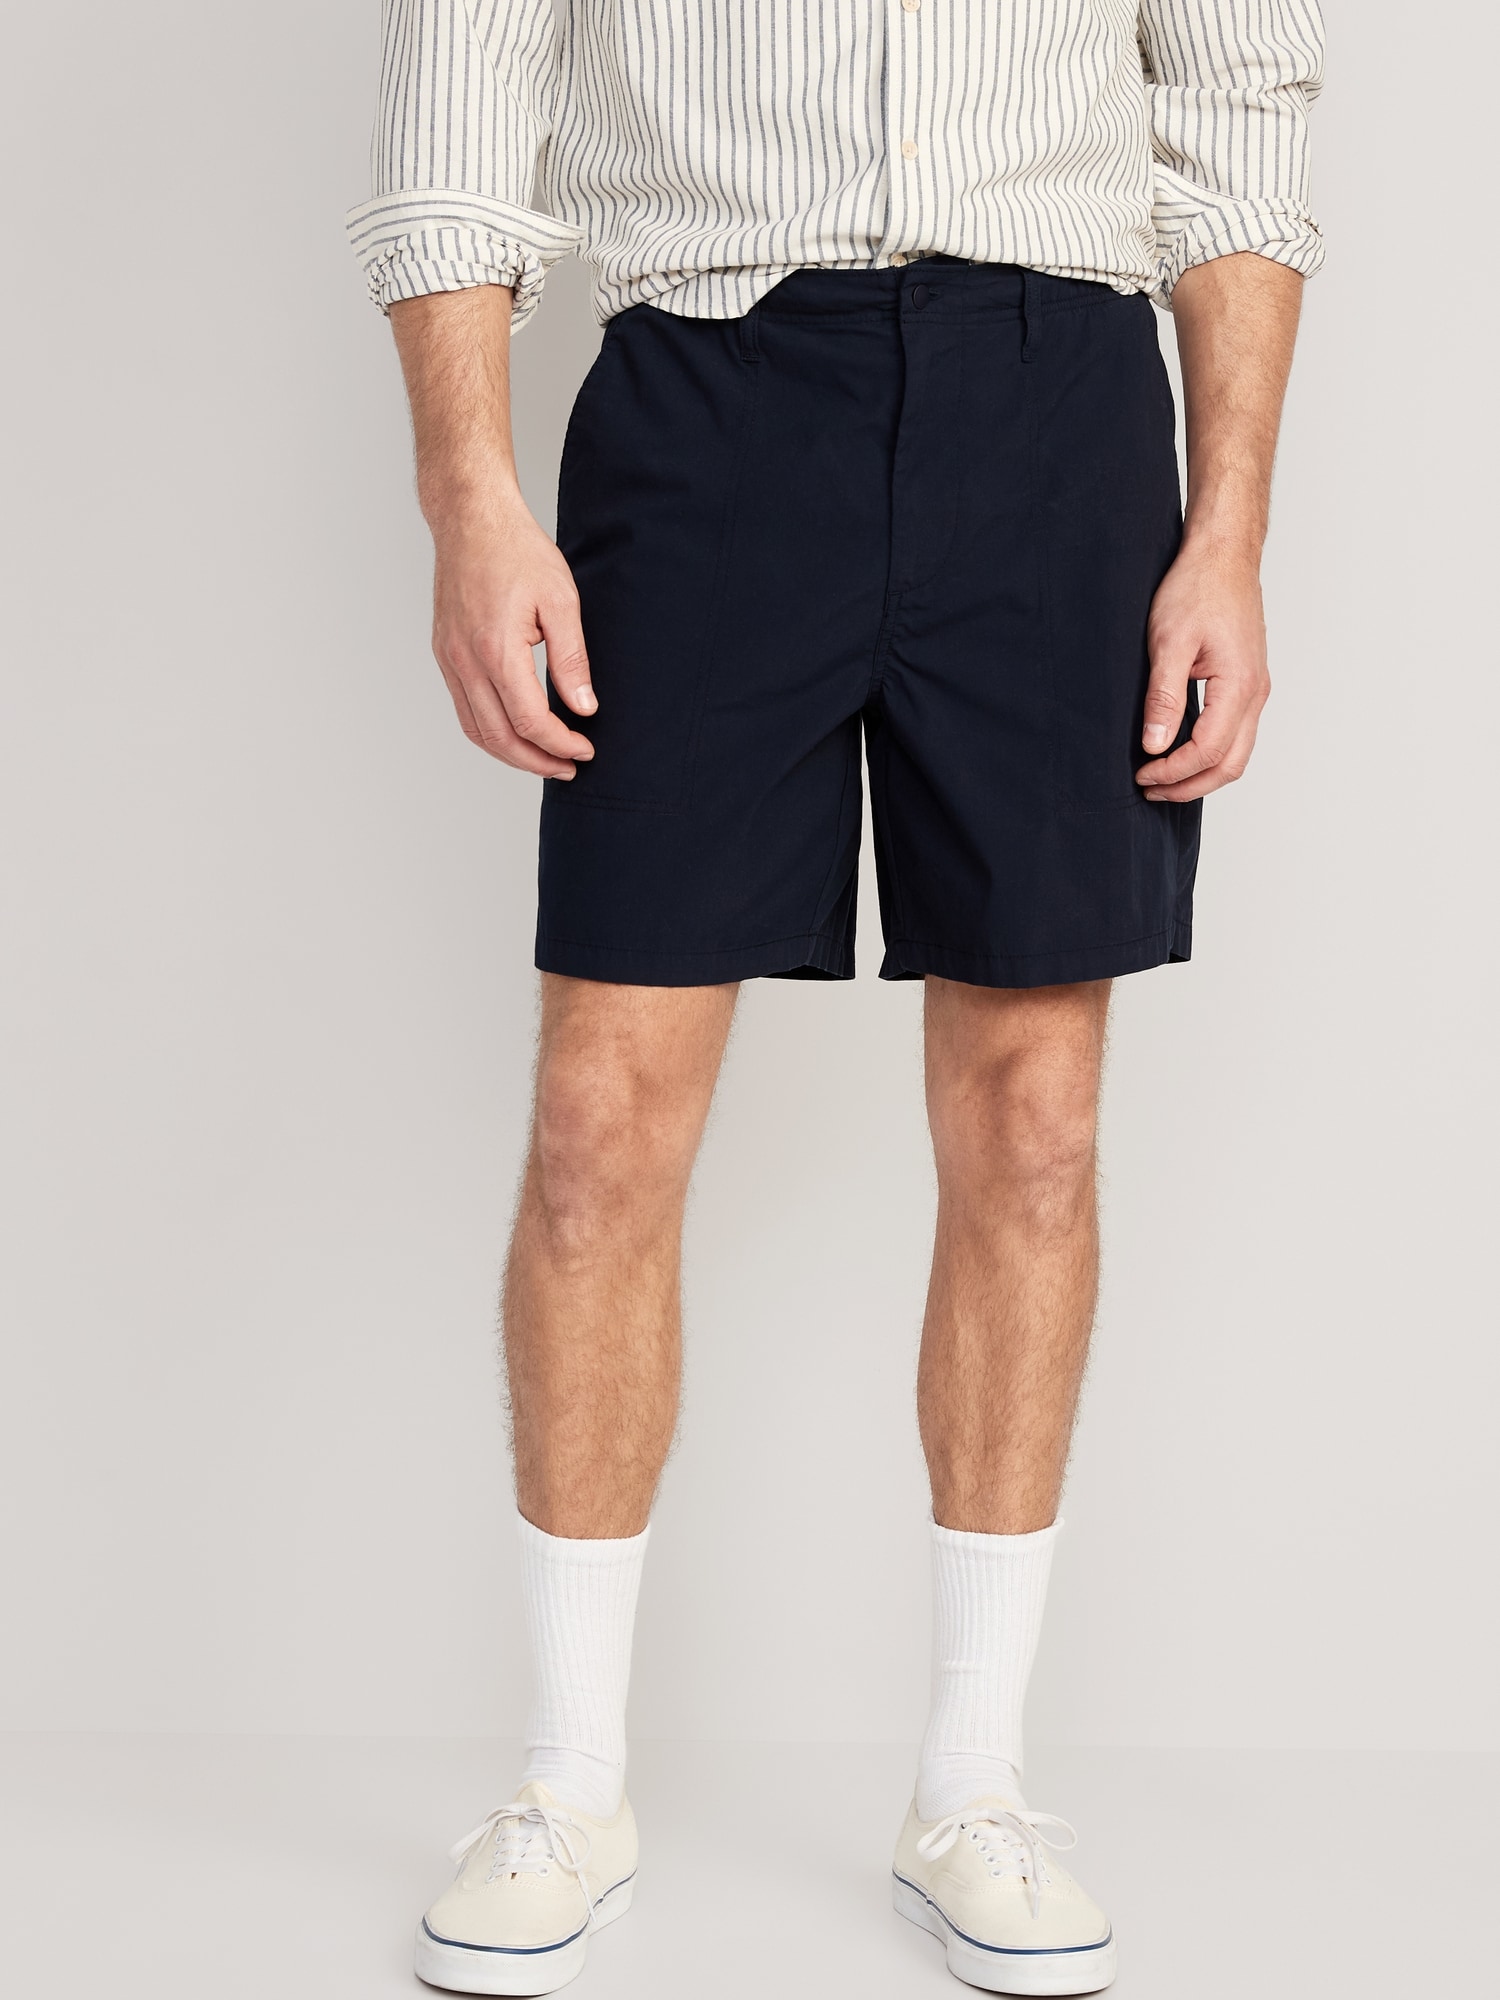 Hybrid Tech Chino Shorts -- 7-inch inseam | Old Navy